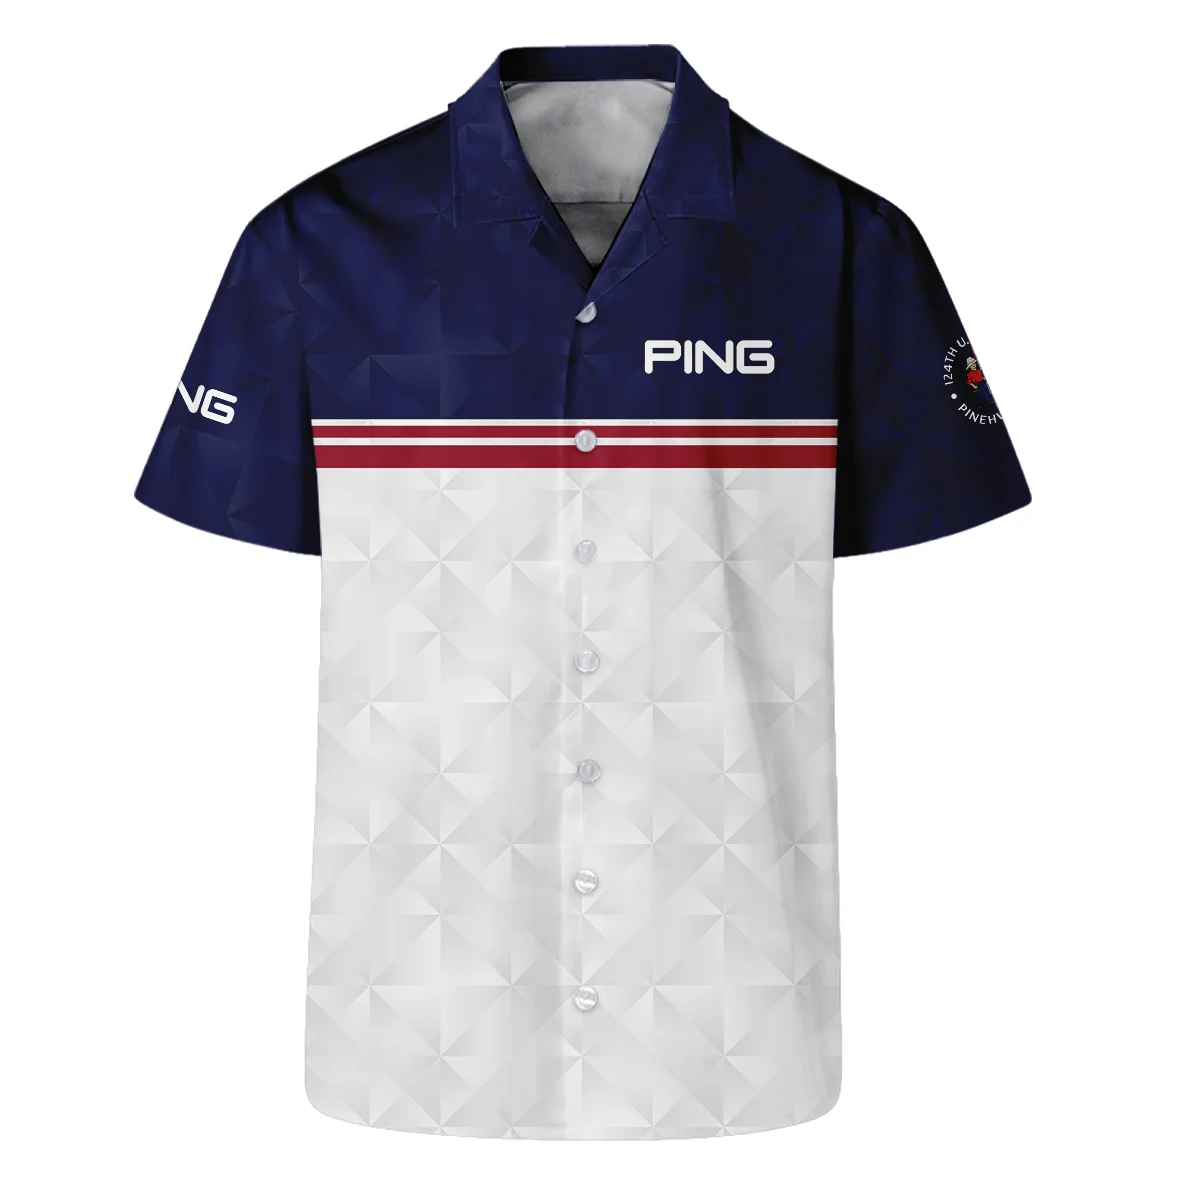 Golf Sport 124th U.S. Open Pinehurst Ping Zipper Hoodie Shirt Dark Blue White Abstract Geometric Triangles All Over Print Zipper Hoodie Shirt